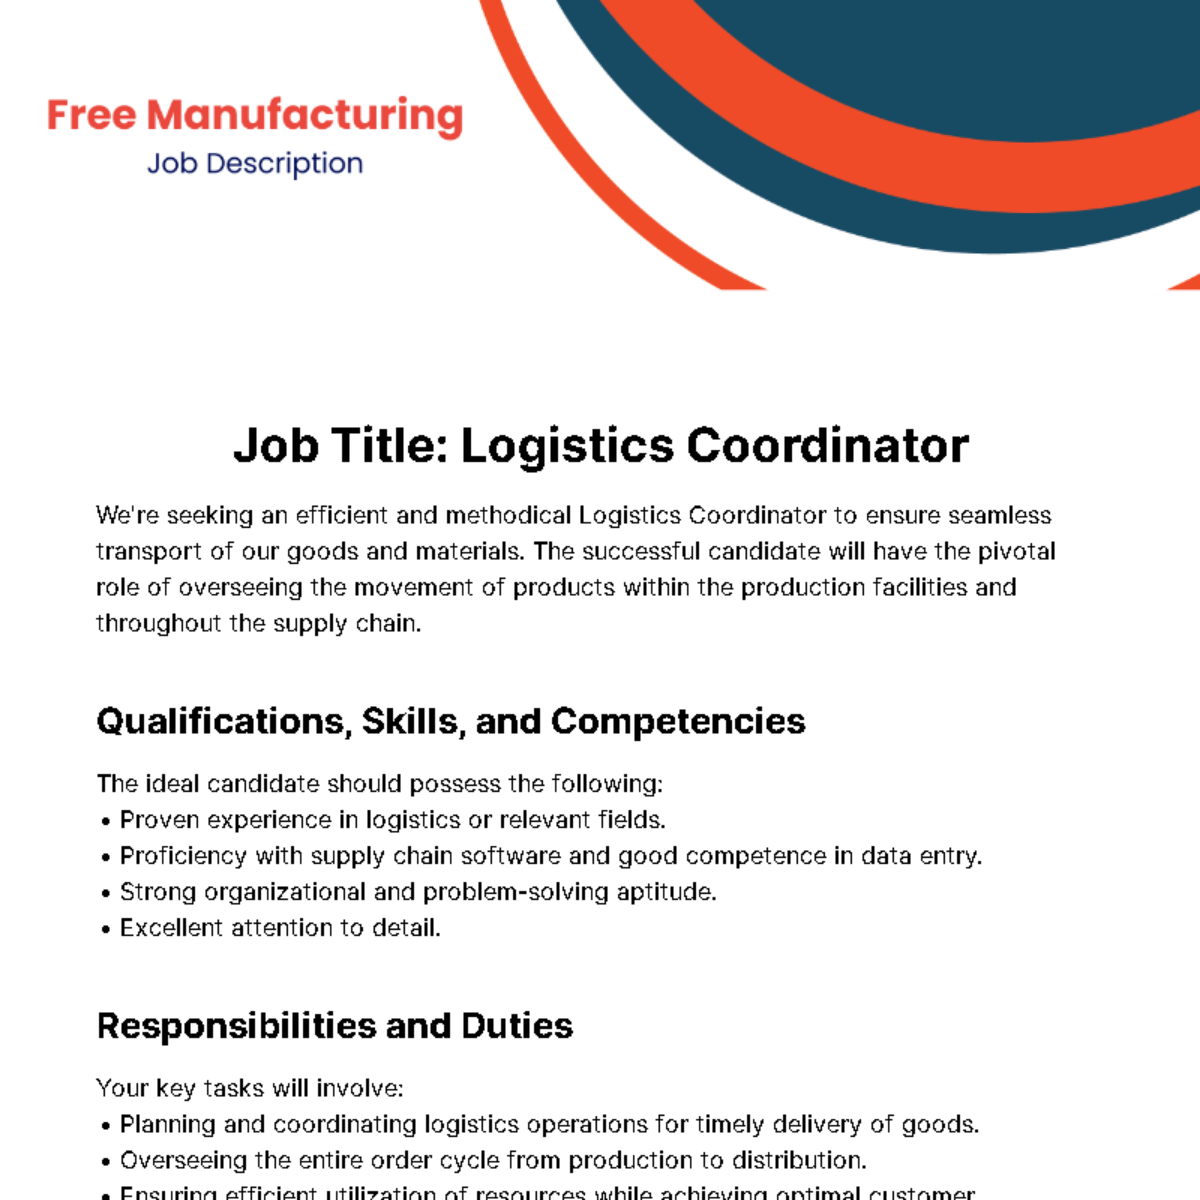 Free Manufacturing Job Description Template